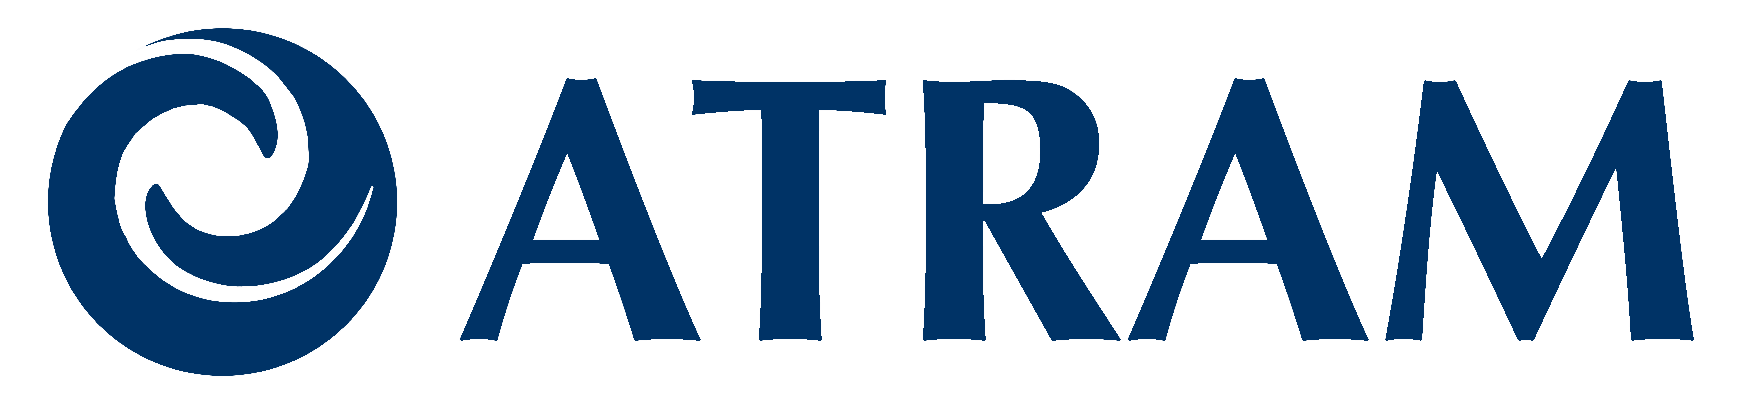 ATRAM logo blue on transparent.png